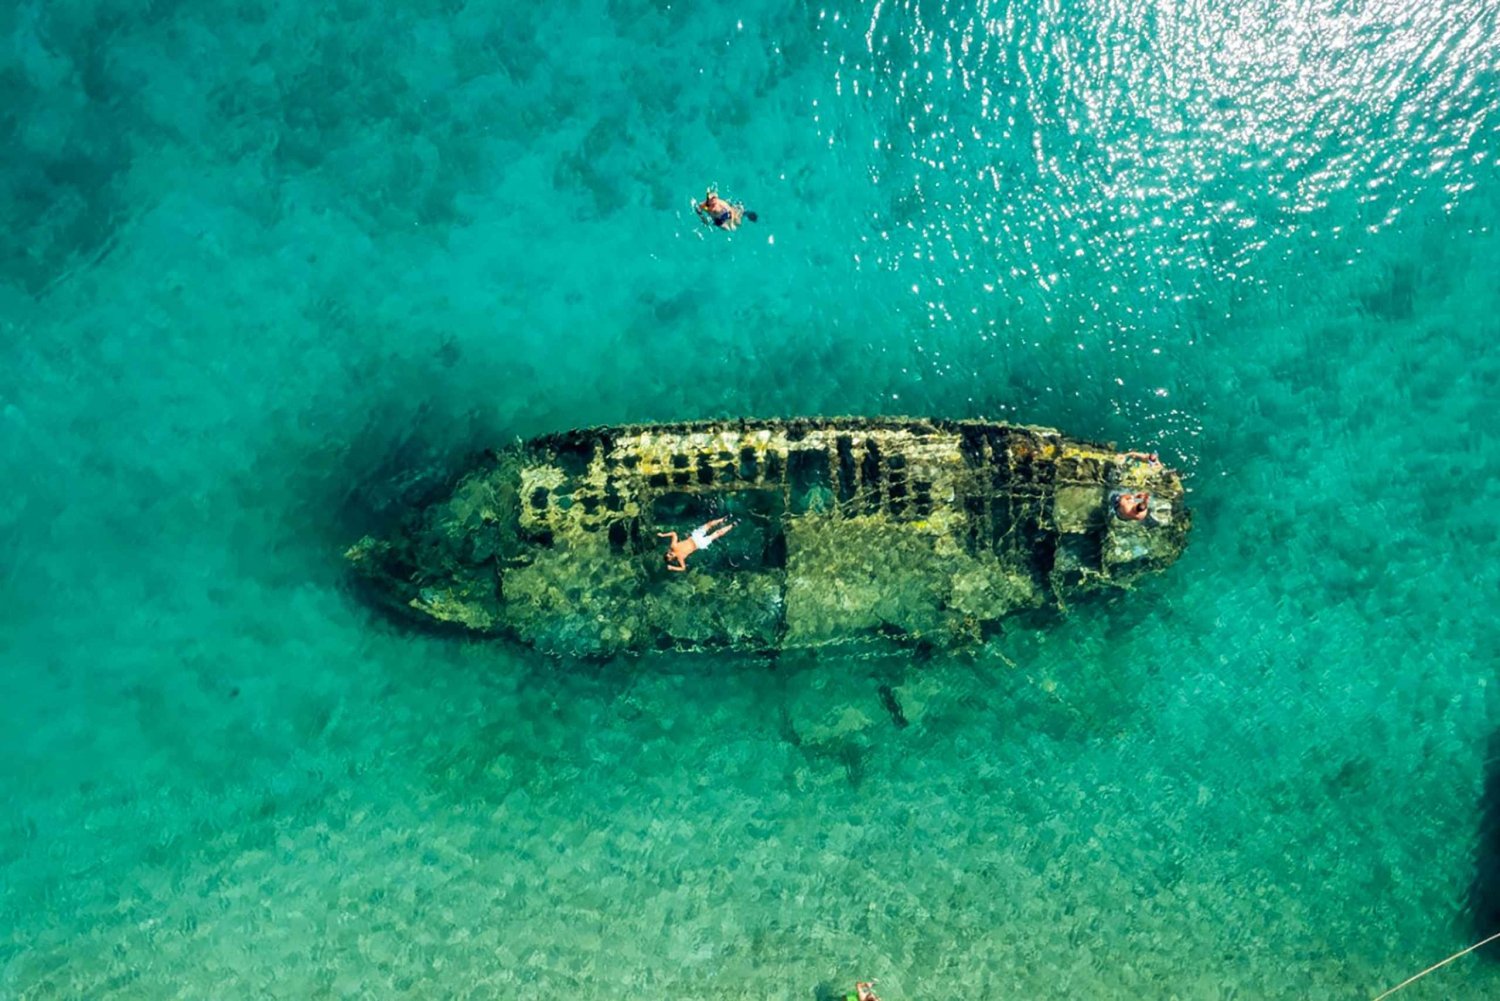 Split: Blue Lagoon, Shipwreck, & Šolta with Lunch & Drinks